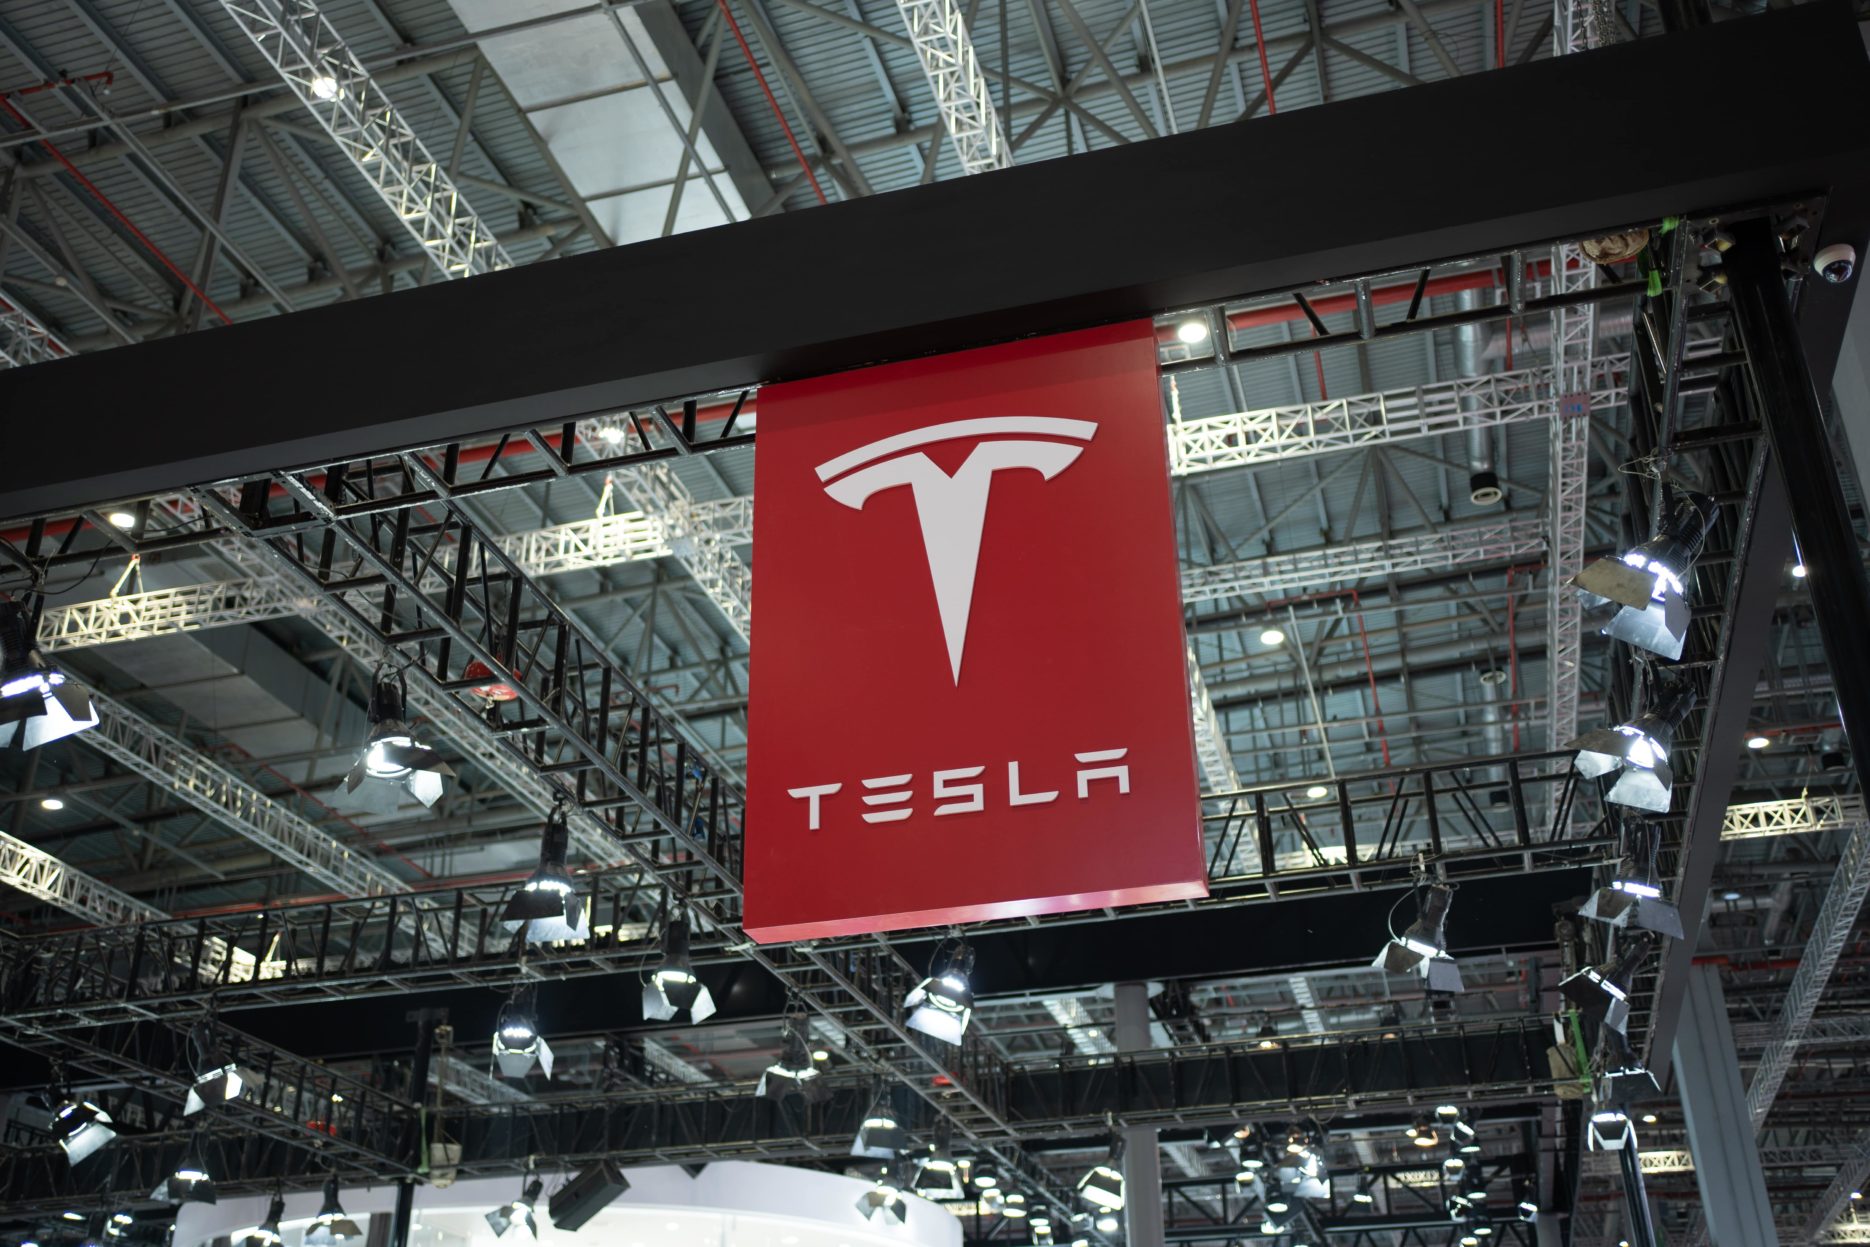 EV automaker Tesla. Credit: Adobe Stock